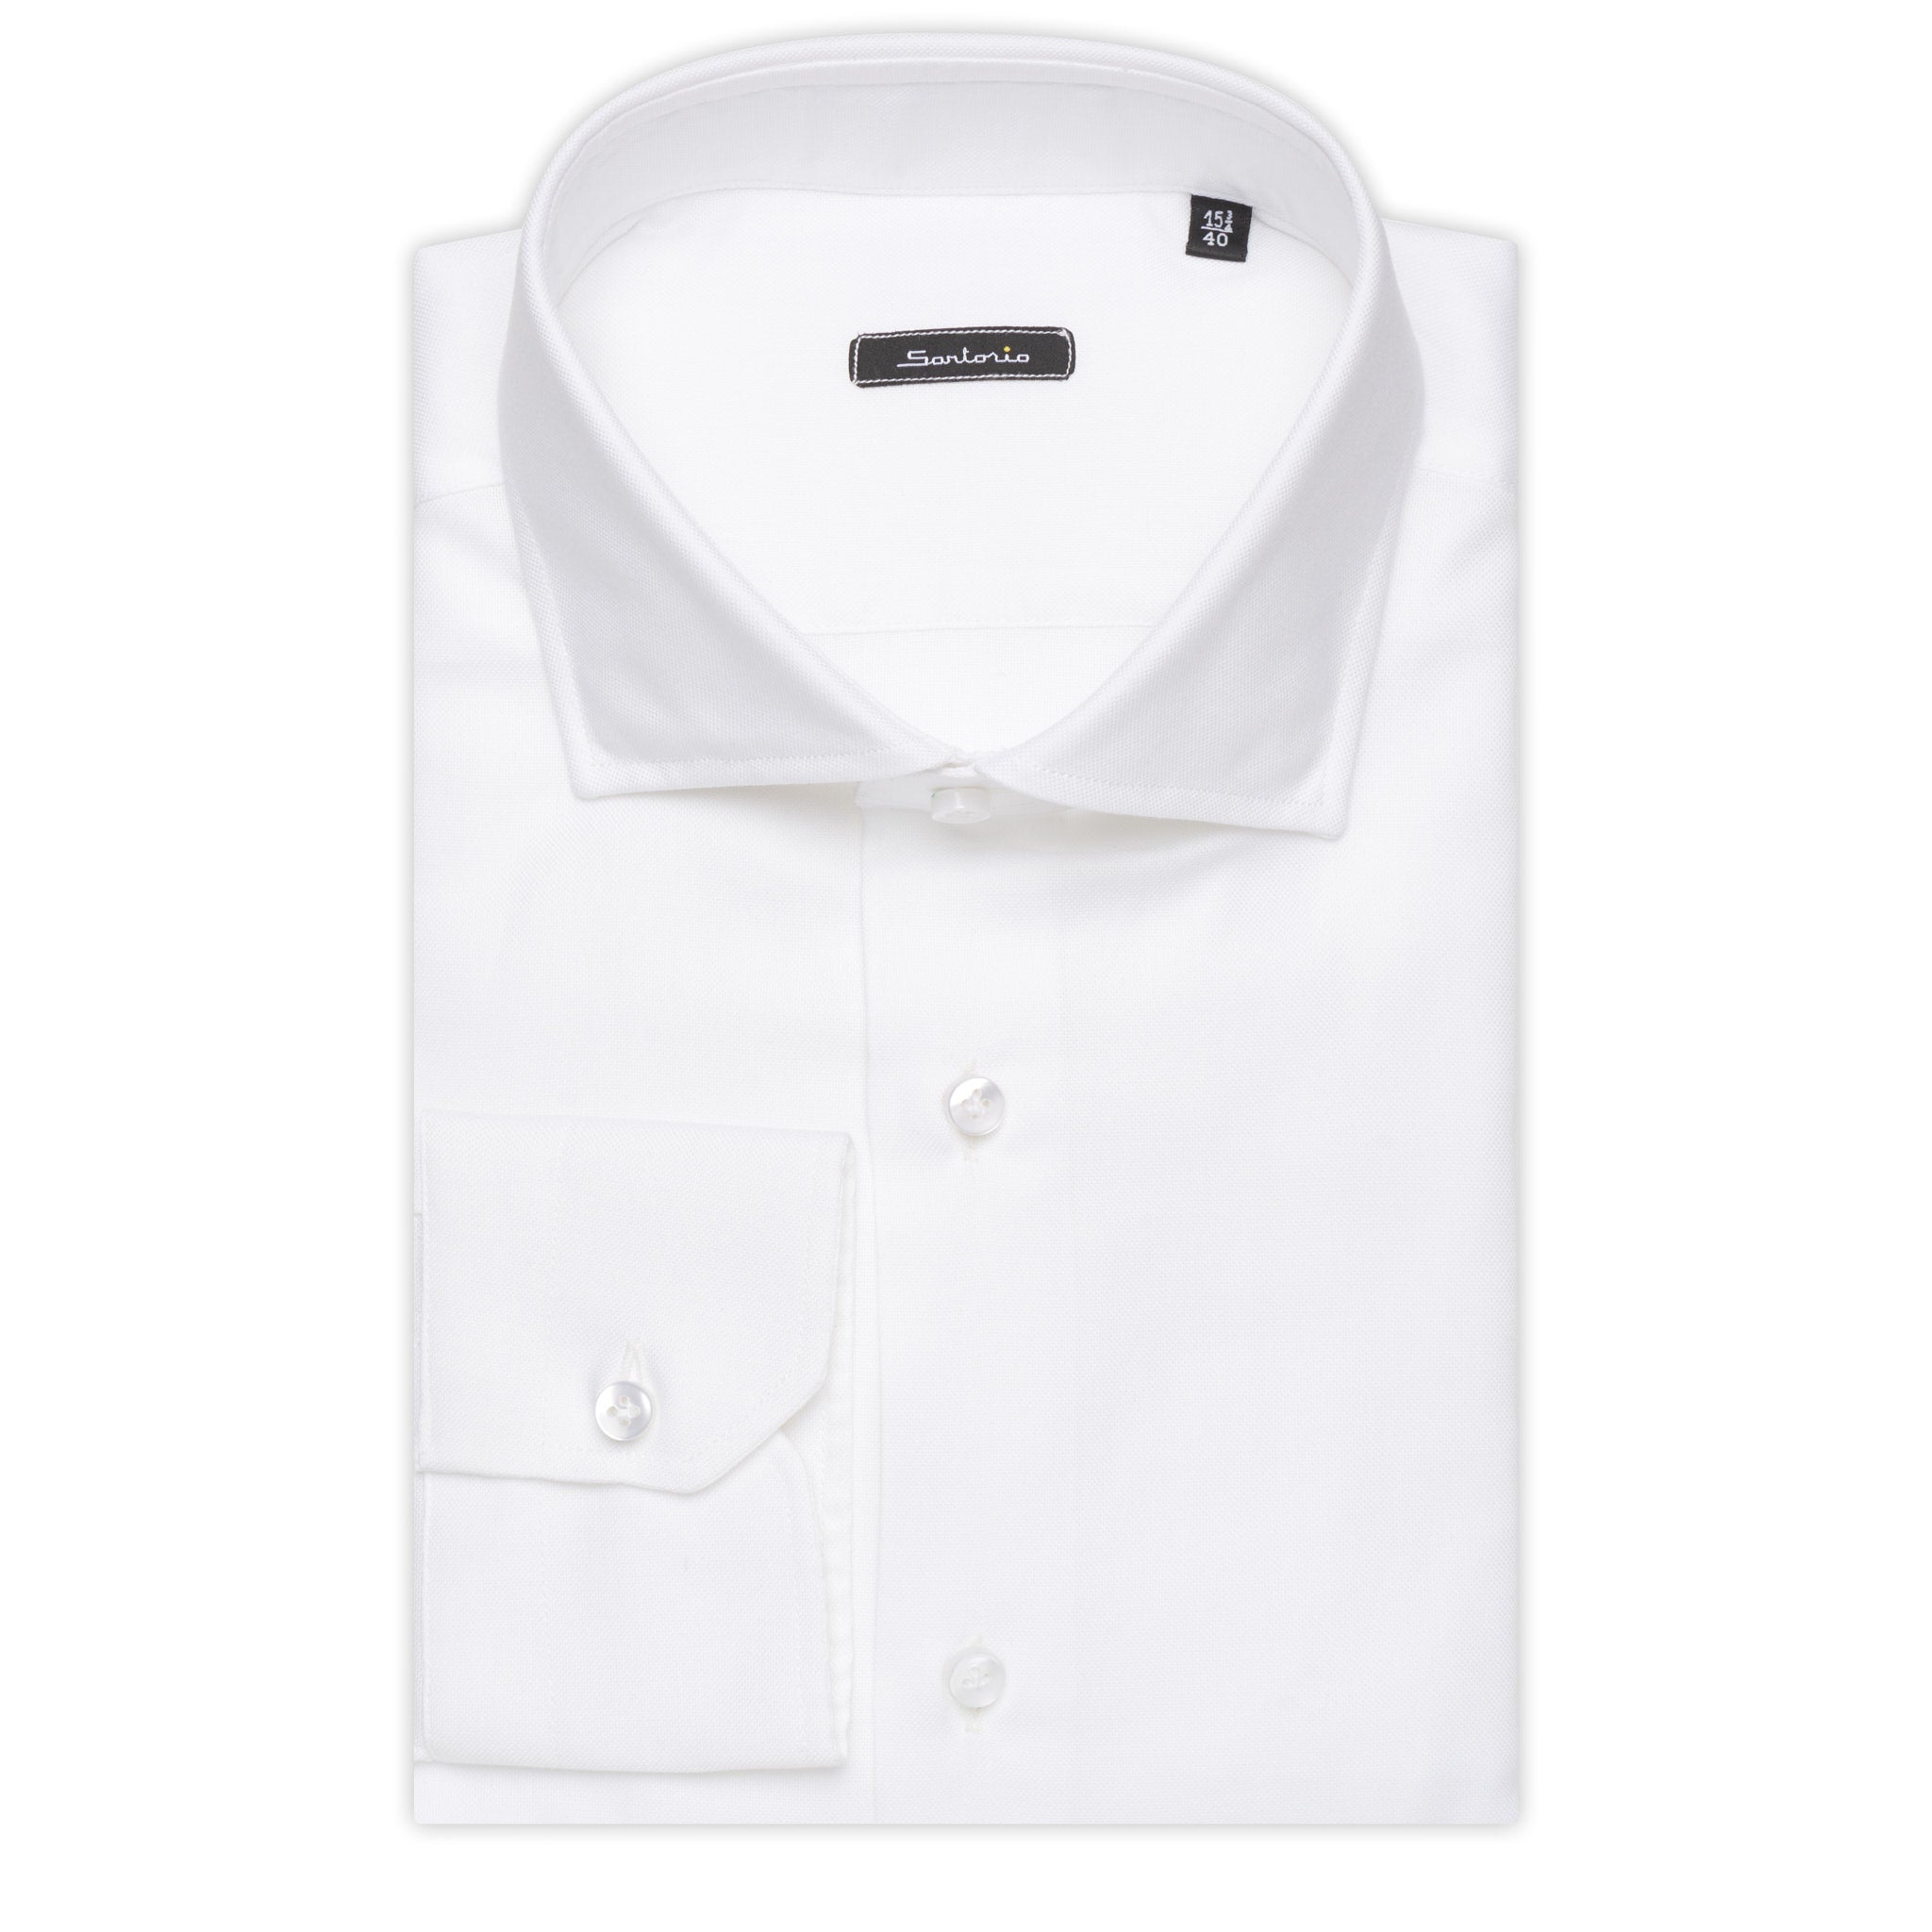 SARTORIO by KITON White Cotton Royal Oxford Dress Shirt NEW Slim Fit